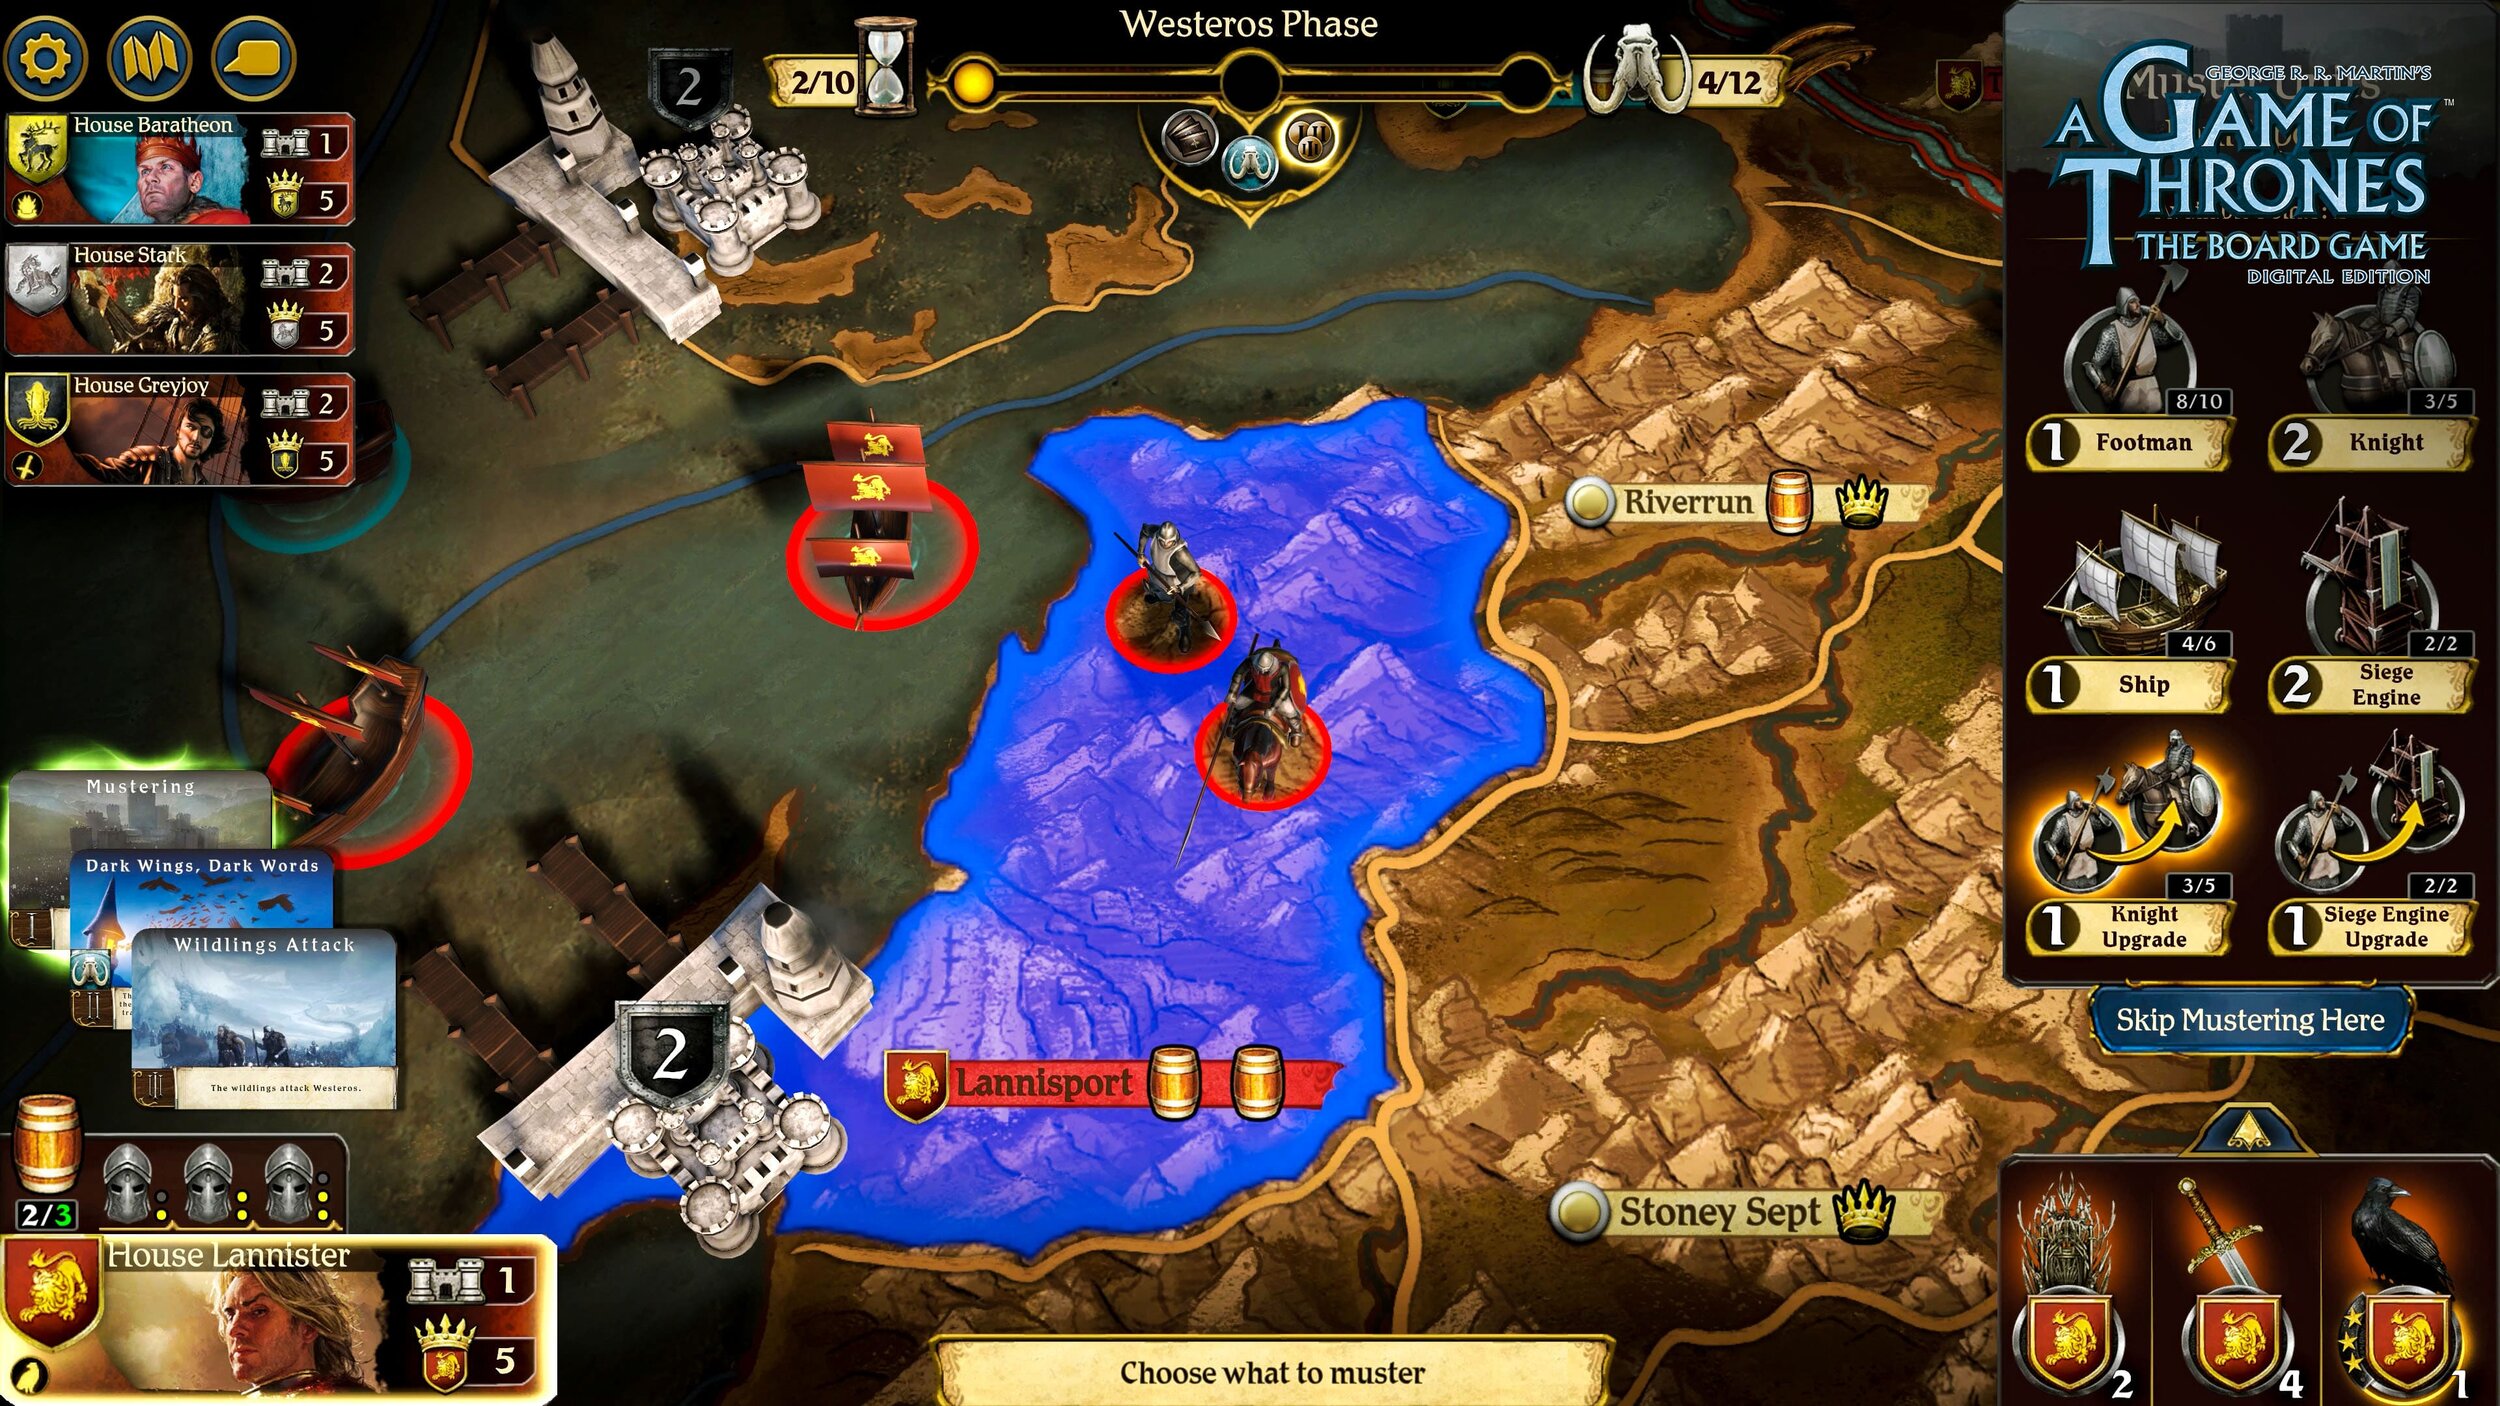 A Game of Thrones: The Board Game - Digital Edition - Screenshot 5.jpg